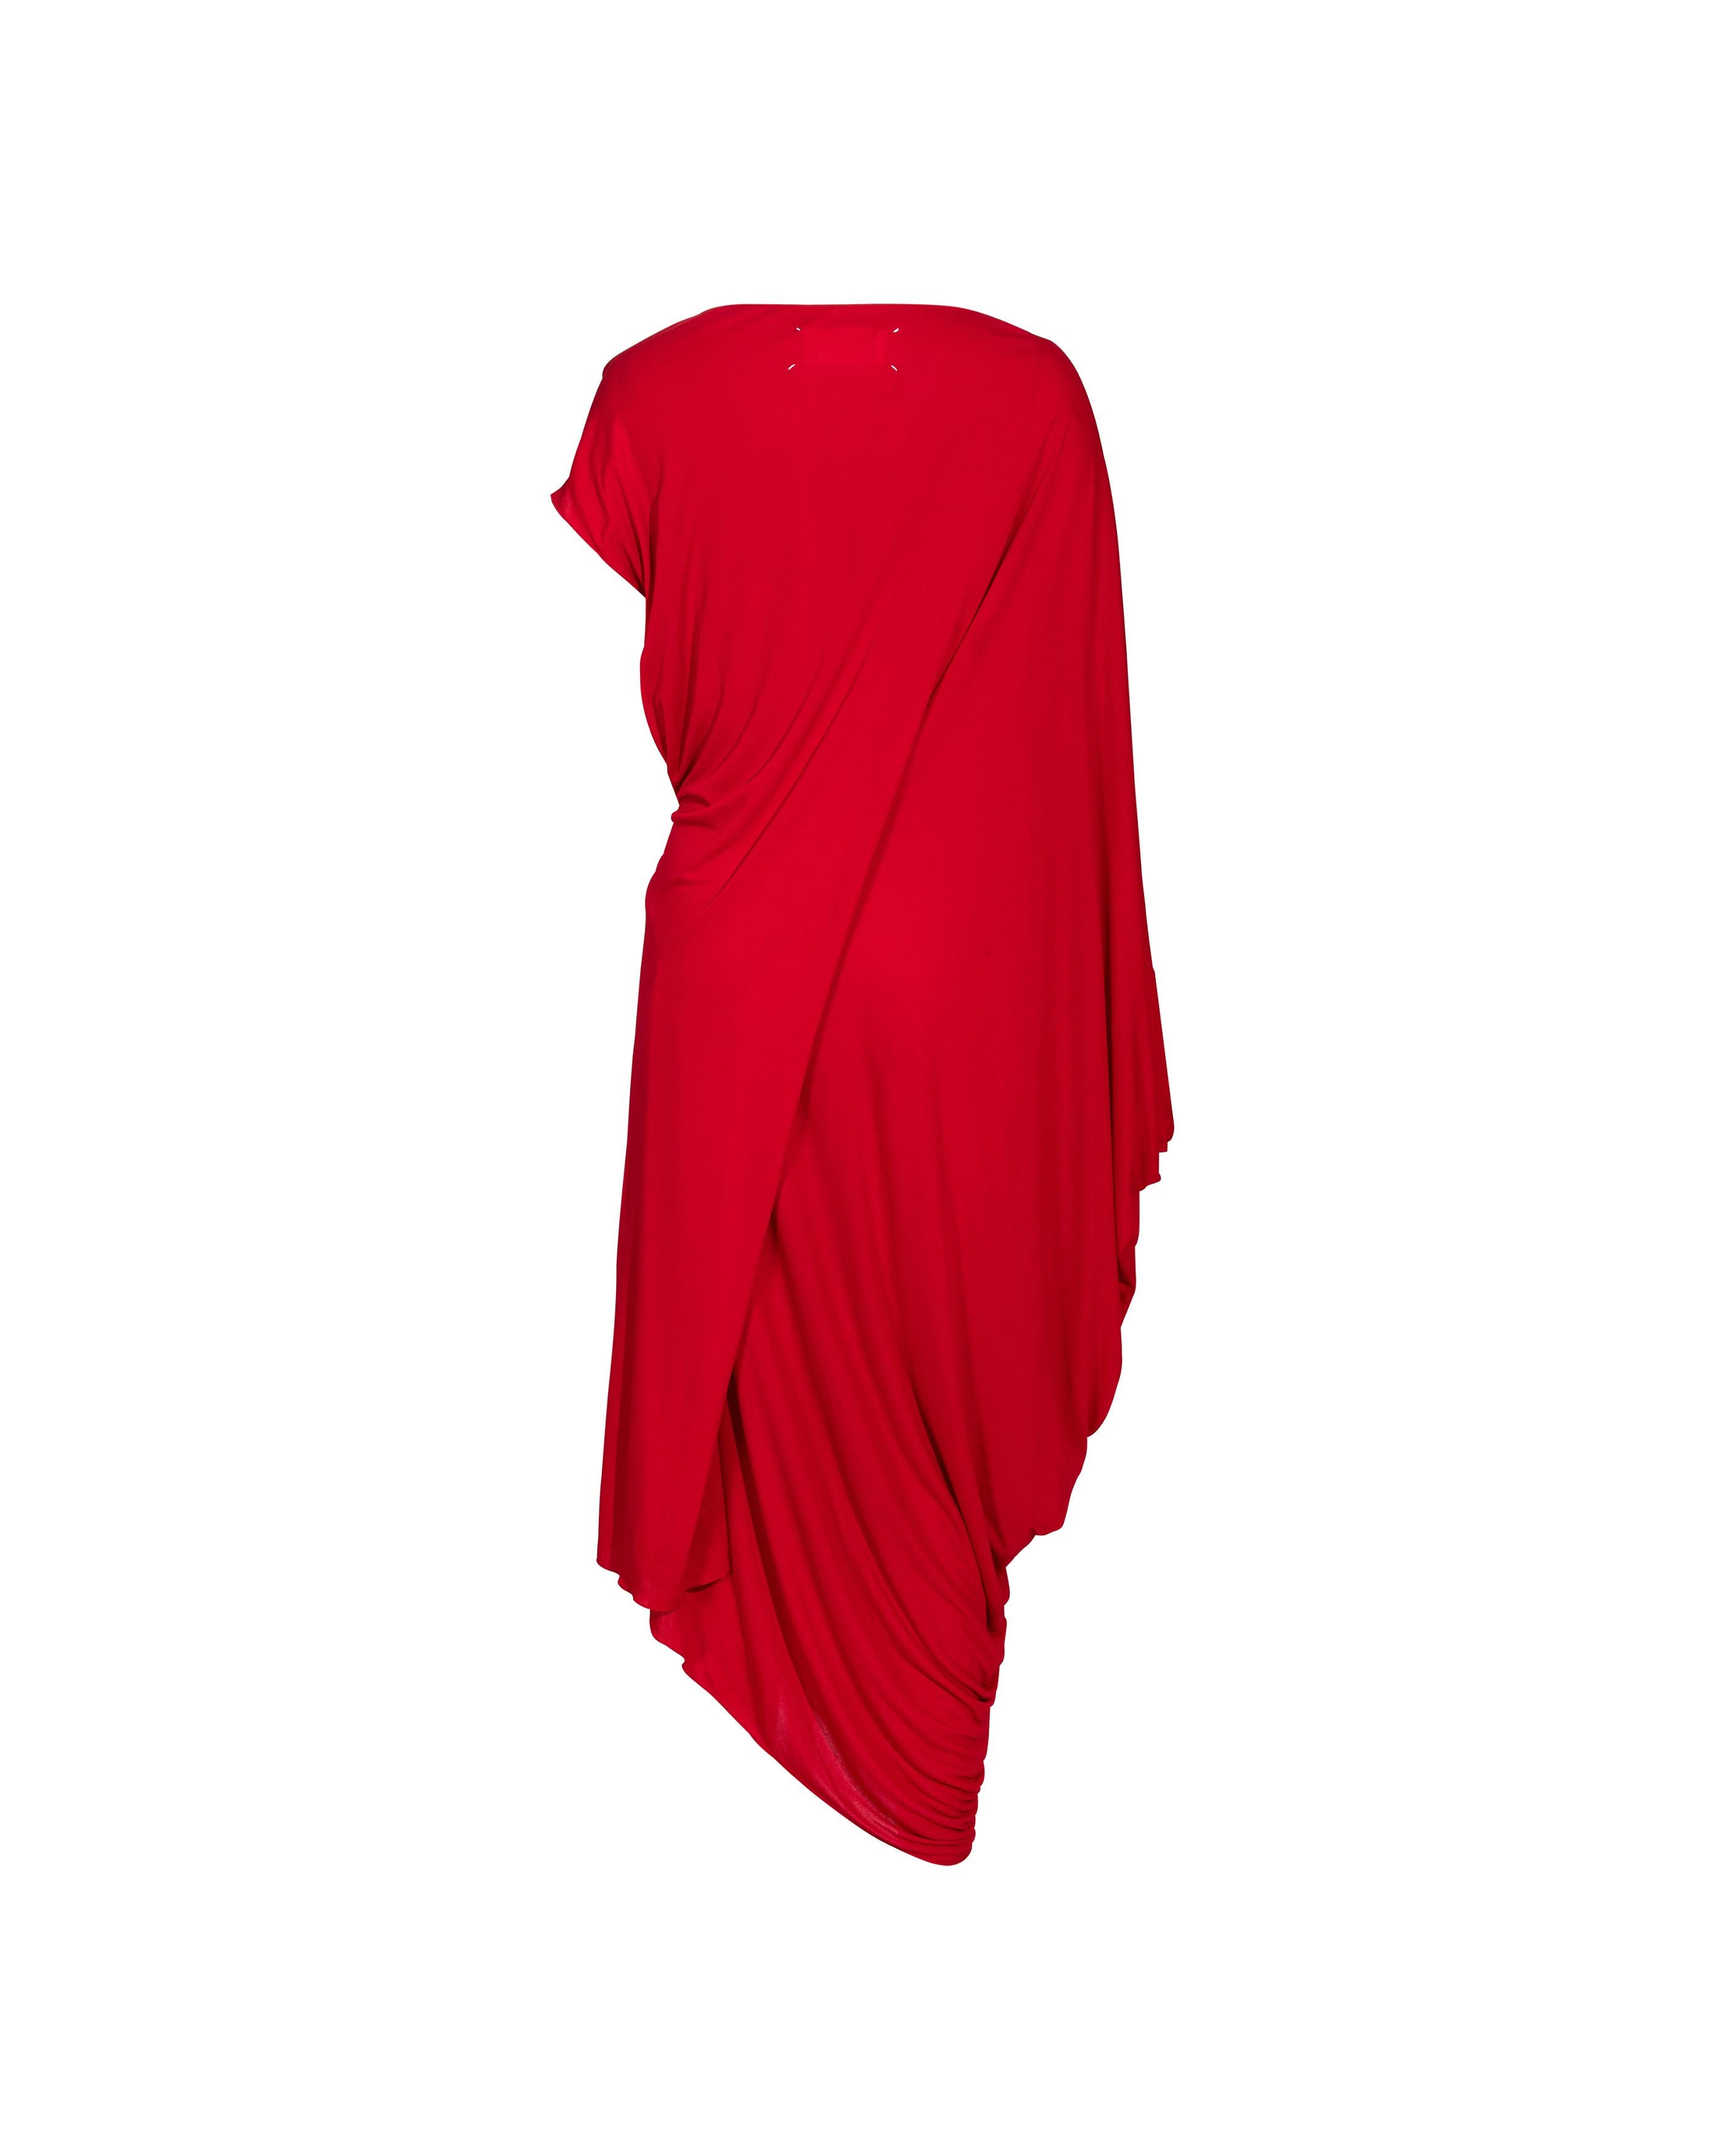 S/S 2009 Maison Martin Margiela Red Jersey Asymmetrical Drape Dress For Sale 2